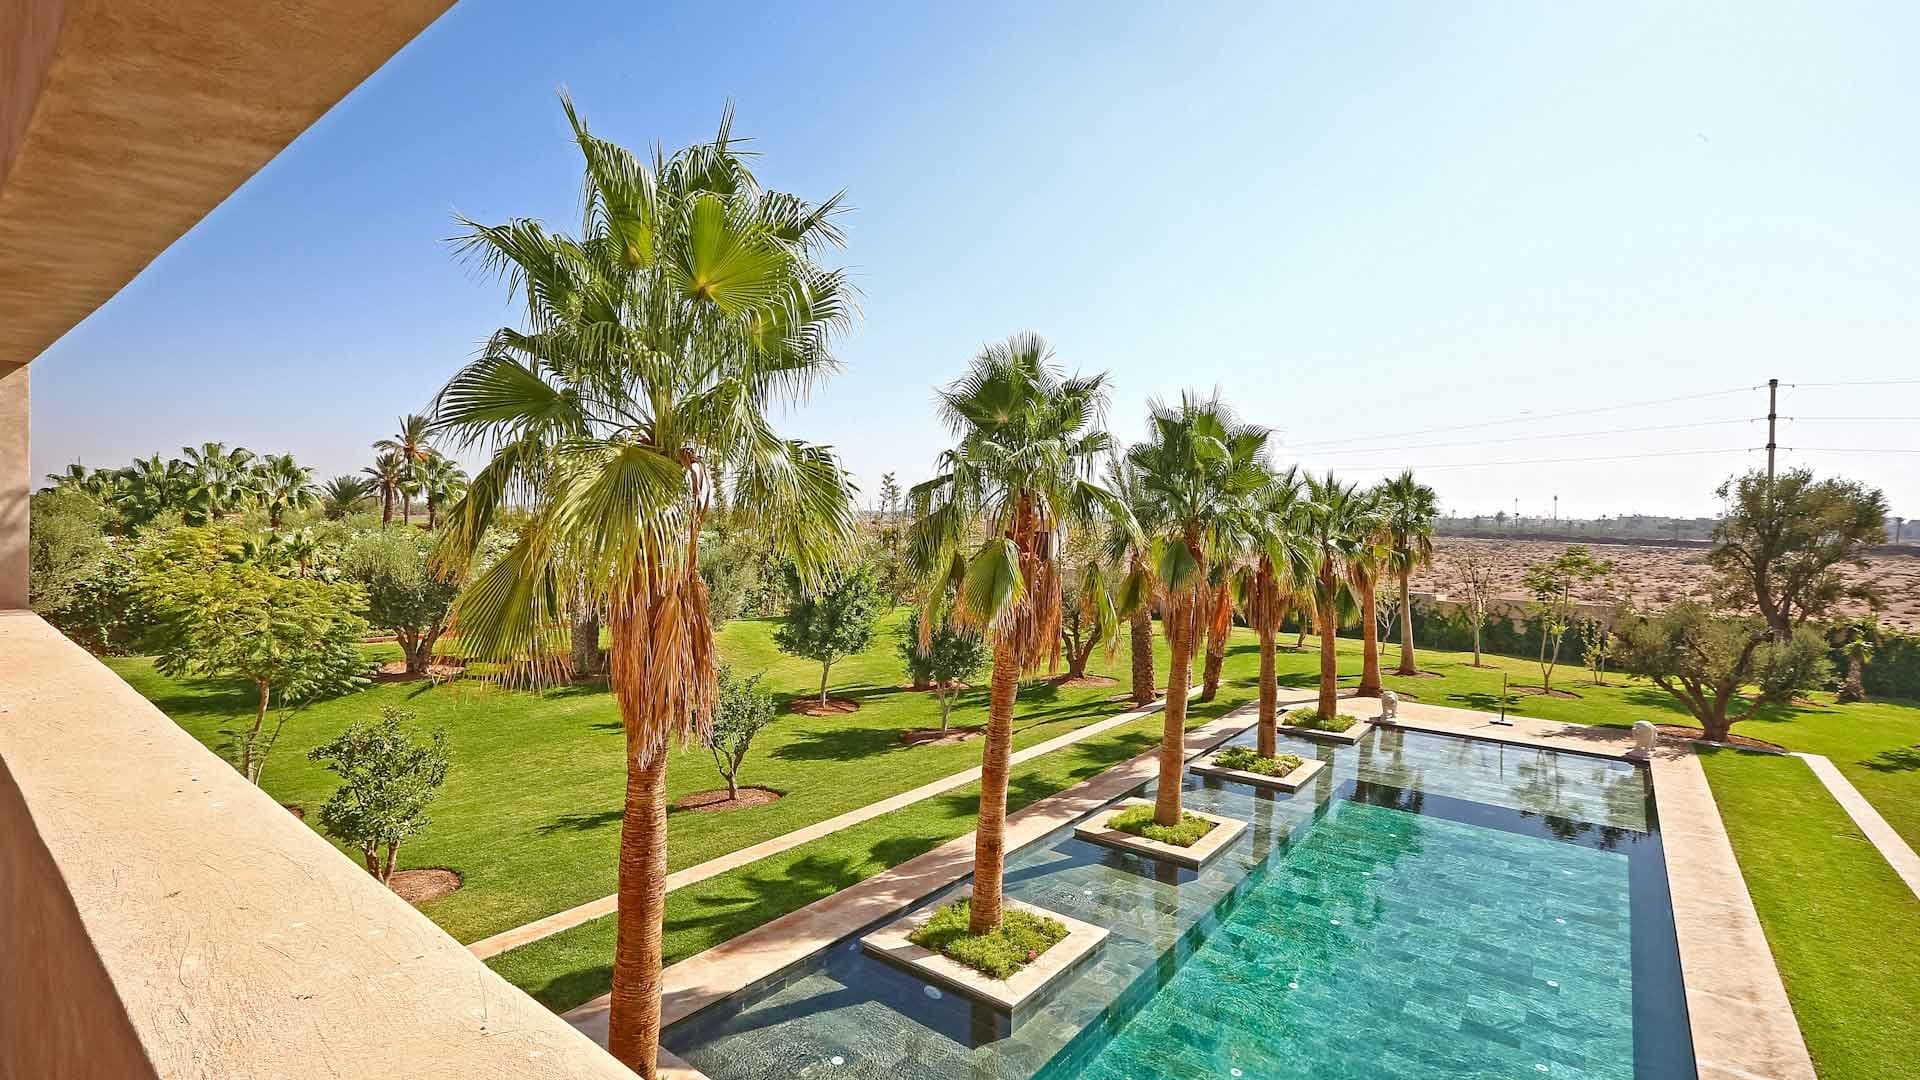 6 Bedroom Villa For Sale Marrakech Lp08723 248ce9a5481e3800.jpg